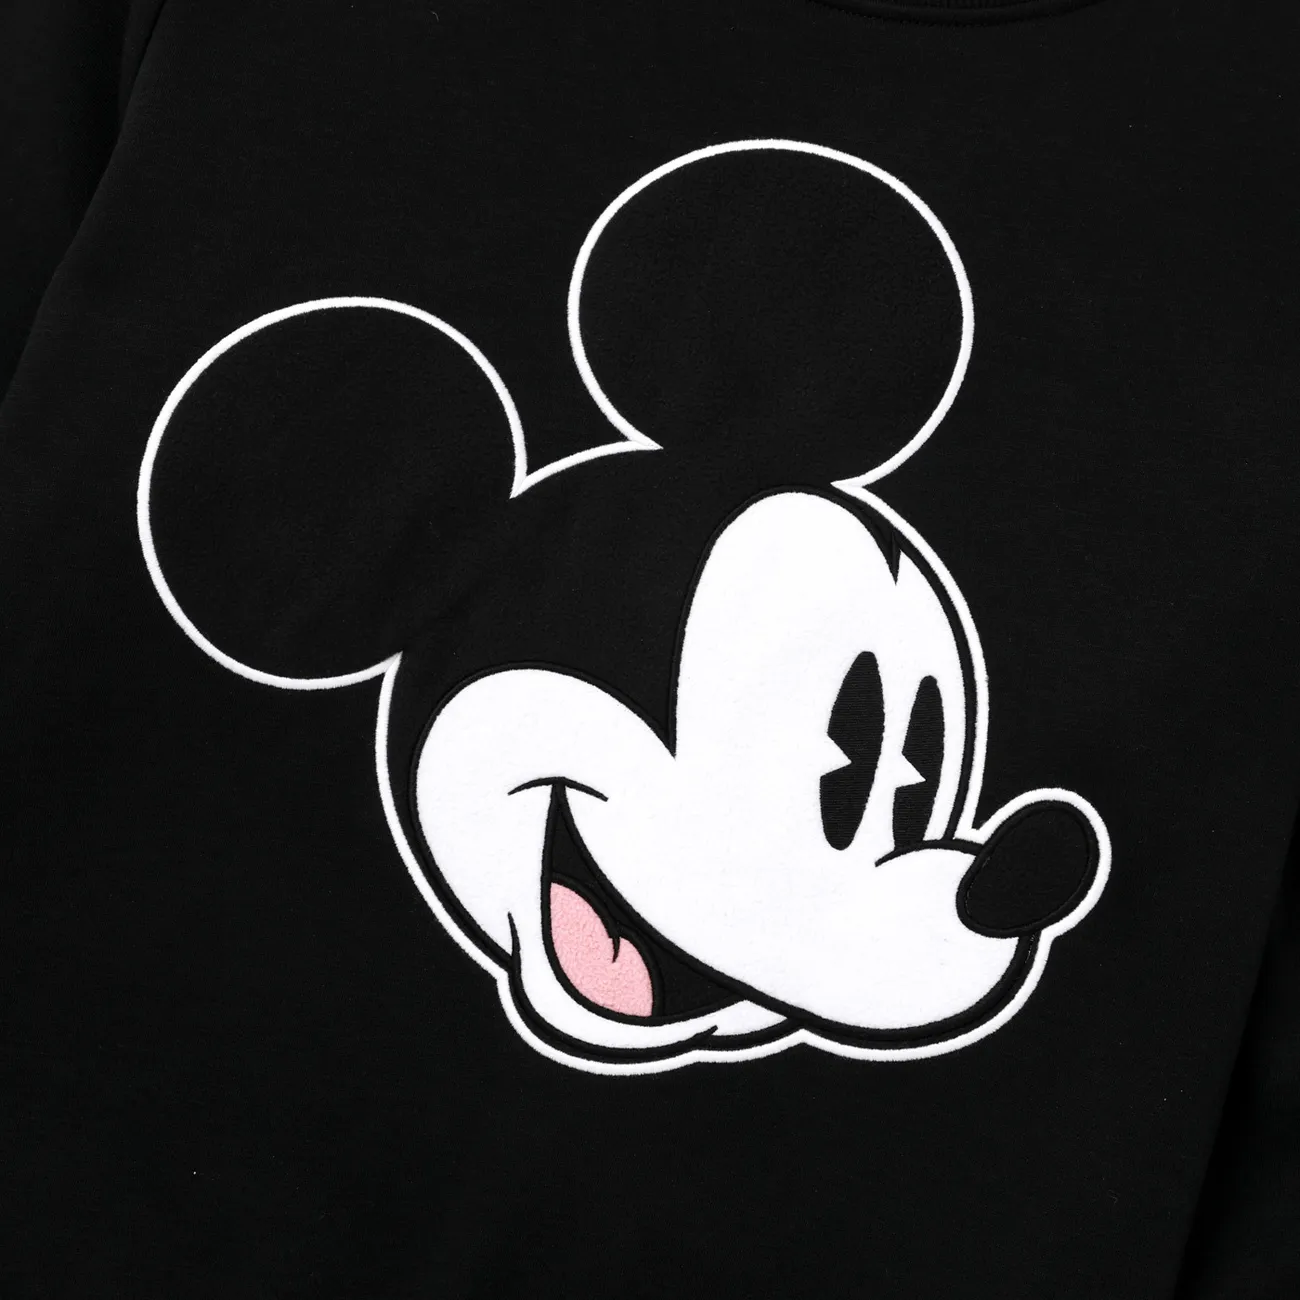 Disney Mickey and Friends Look de família Manga comprida Conjuntos de roupa para a família Conjuntos Preto big image 1